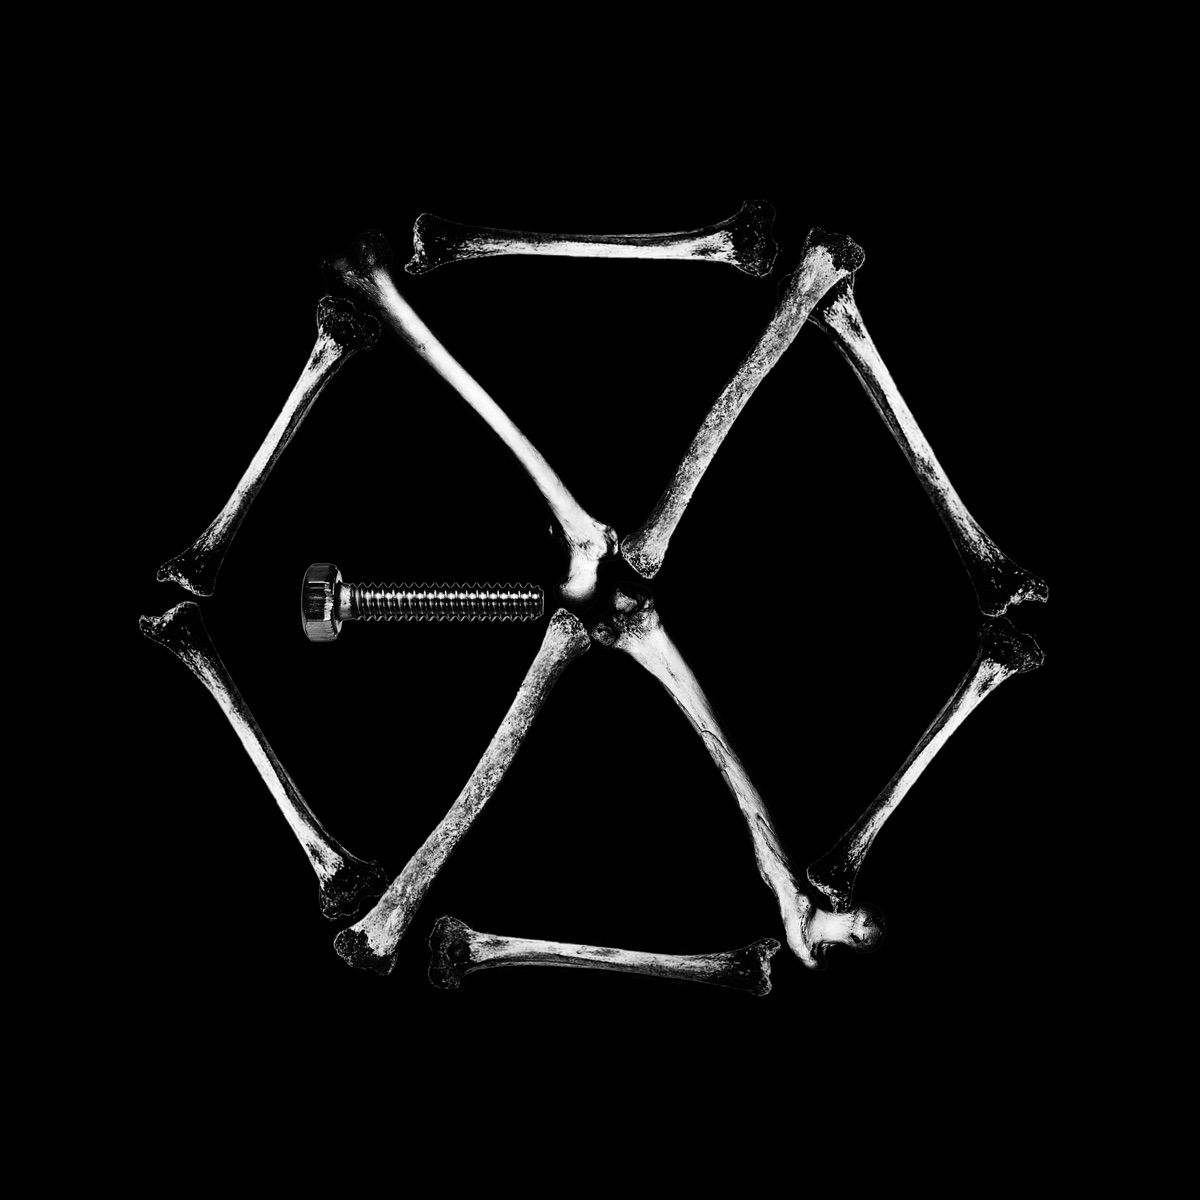 EXO – Monster (LDN Noise Creeper Bass Remix) – Single